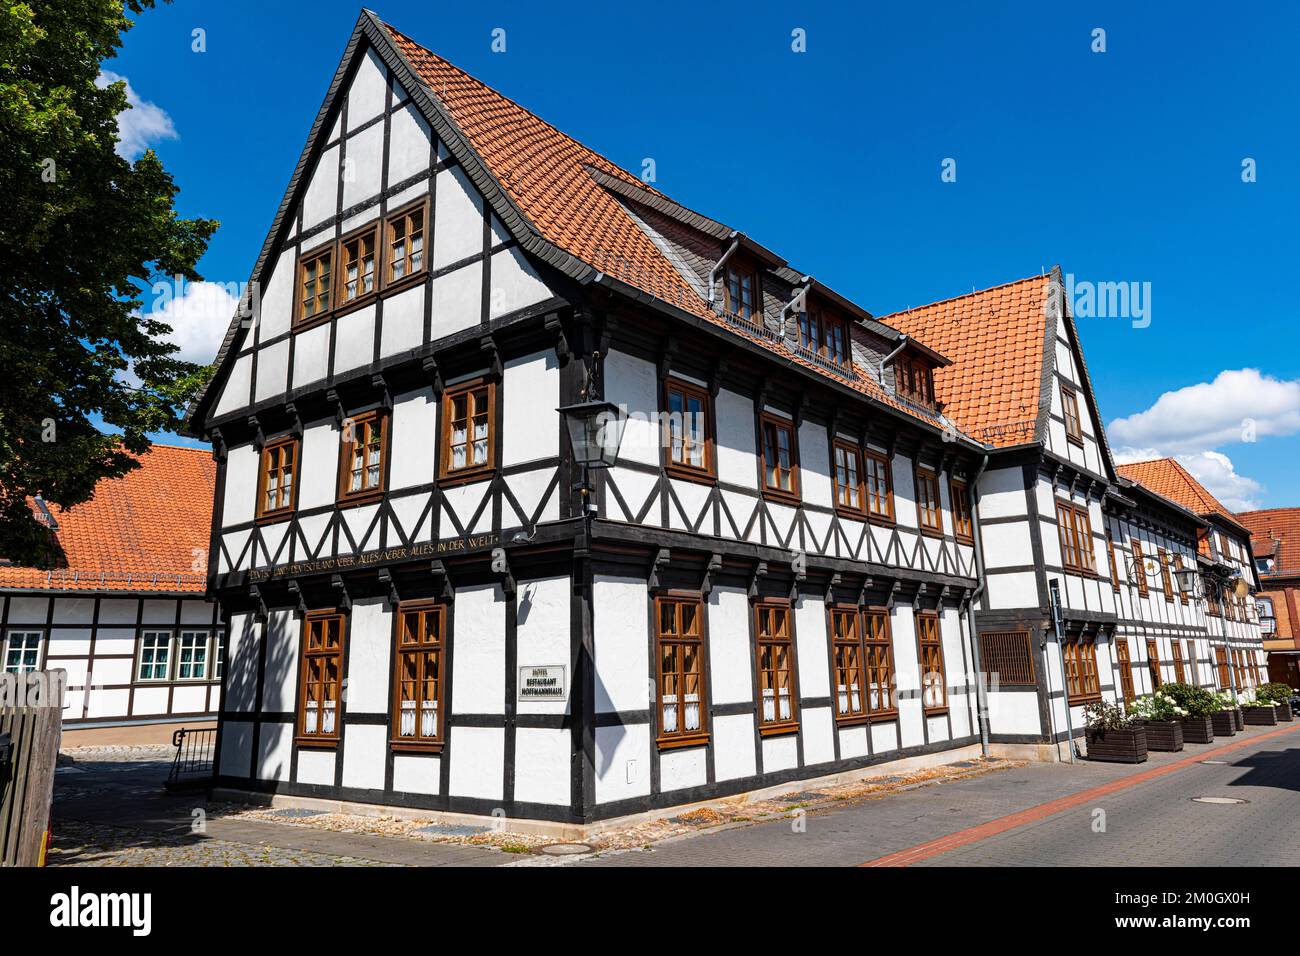 Half timbered houses in Fallersleben, Wolfsburg, Lower Saxony, Germany, Europe Stock Photo